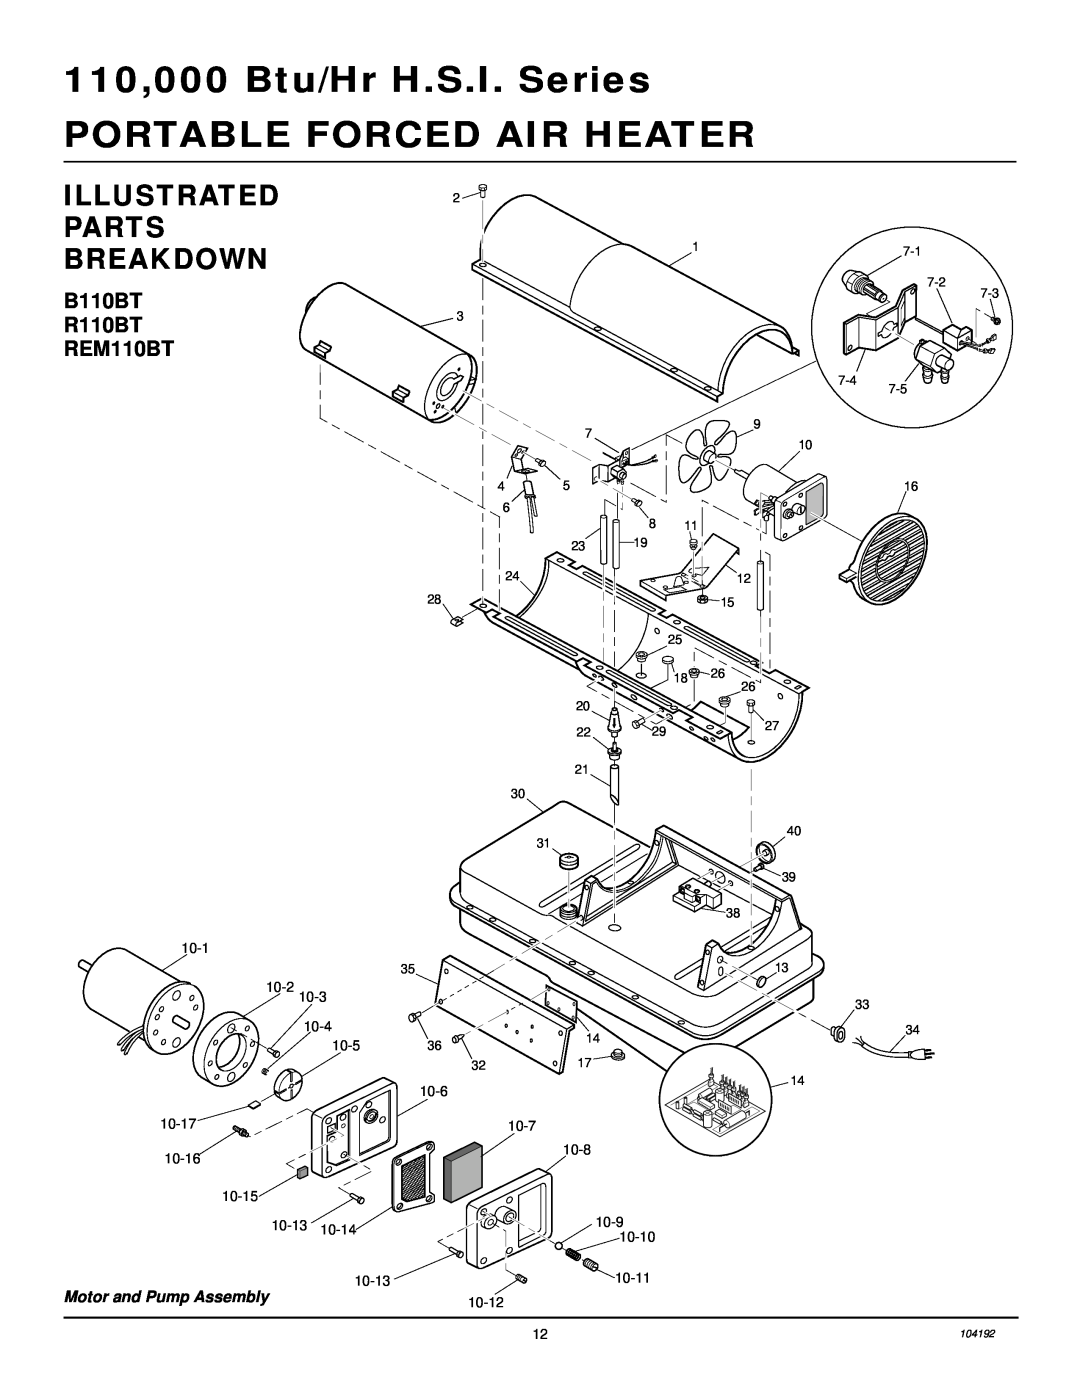 Desa Illustrated Parts Breakdown, B110BT R110BT REM110BT, 110,000 Btu/Hr H.S.I. Series, Portable Forced Air Heater 